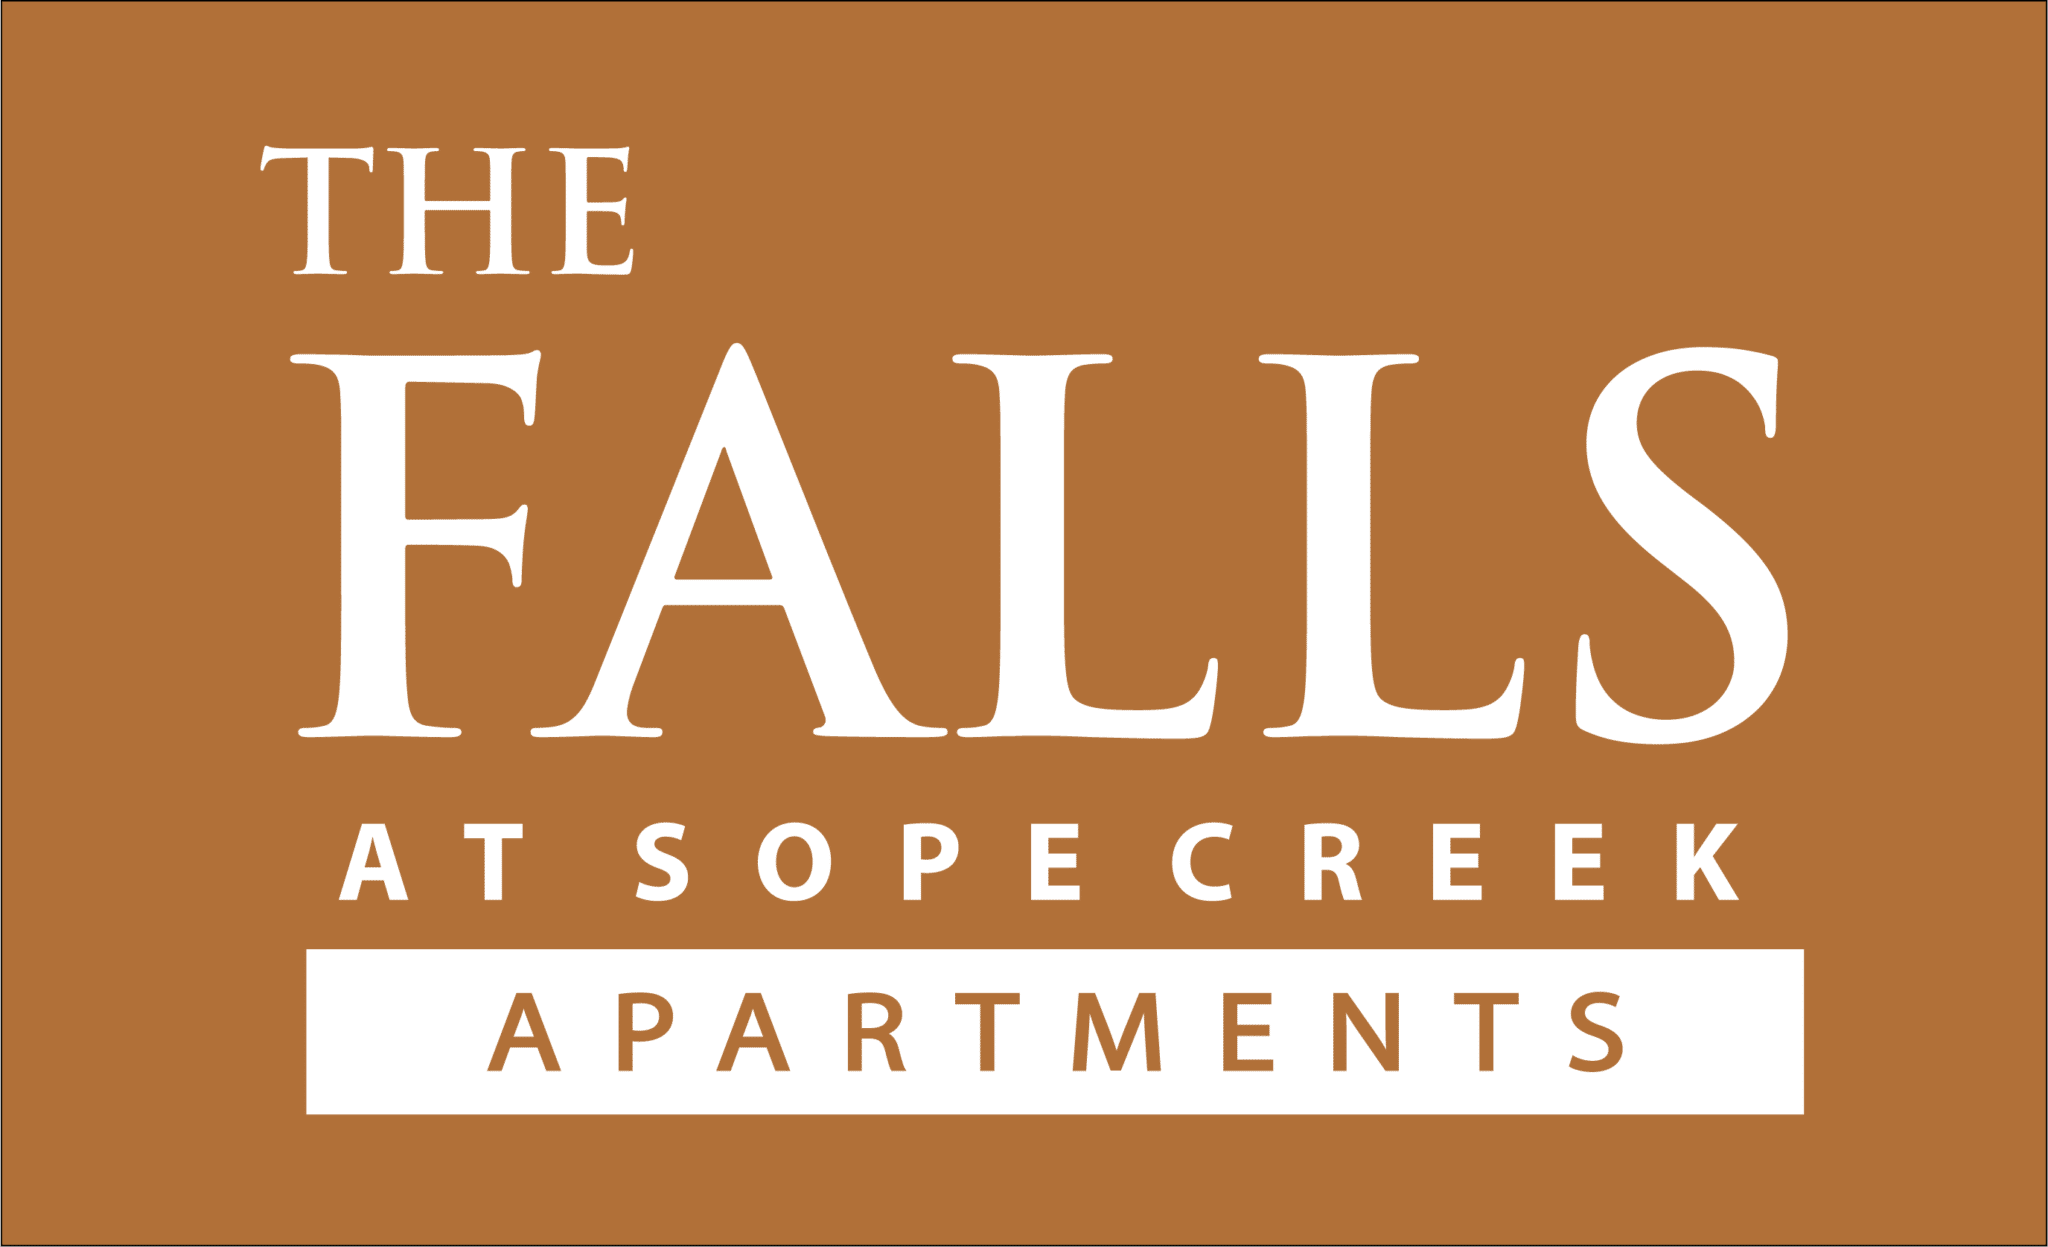 The Falls at Sope Creek Apartments logo